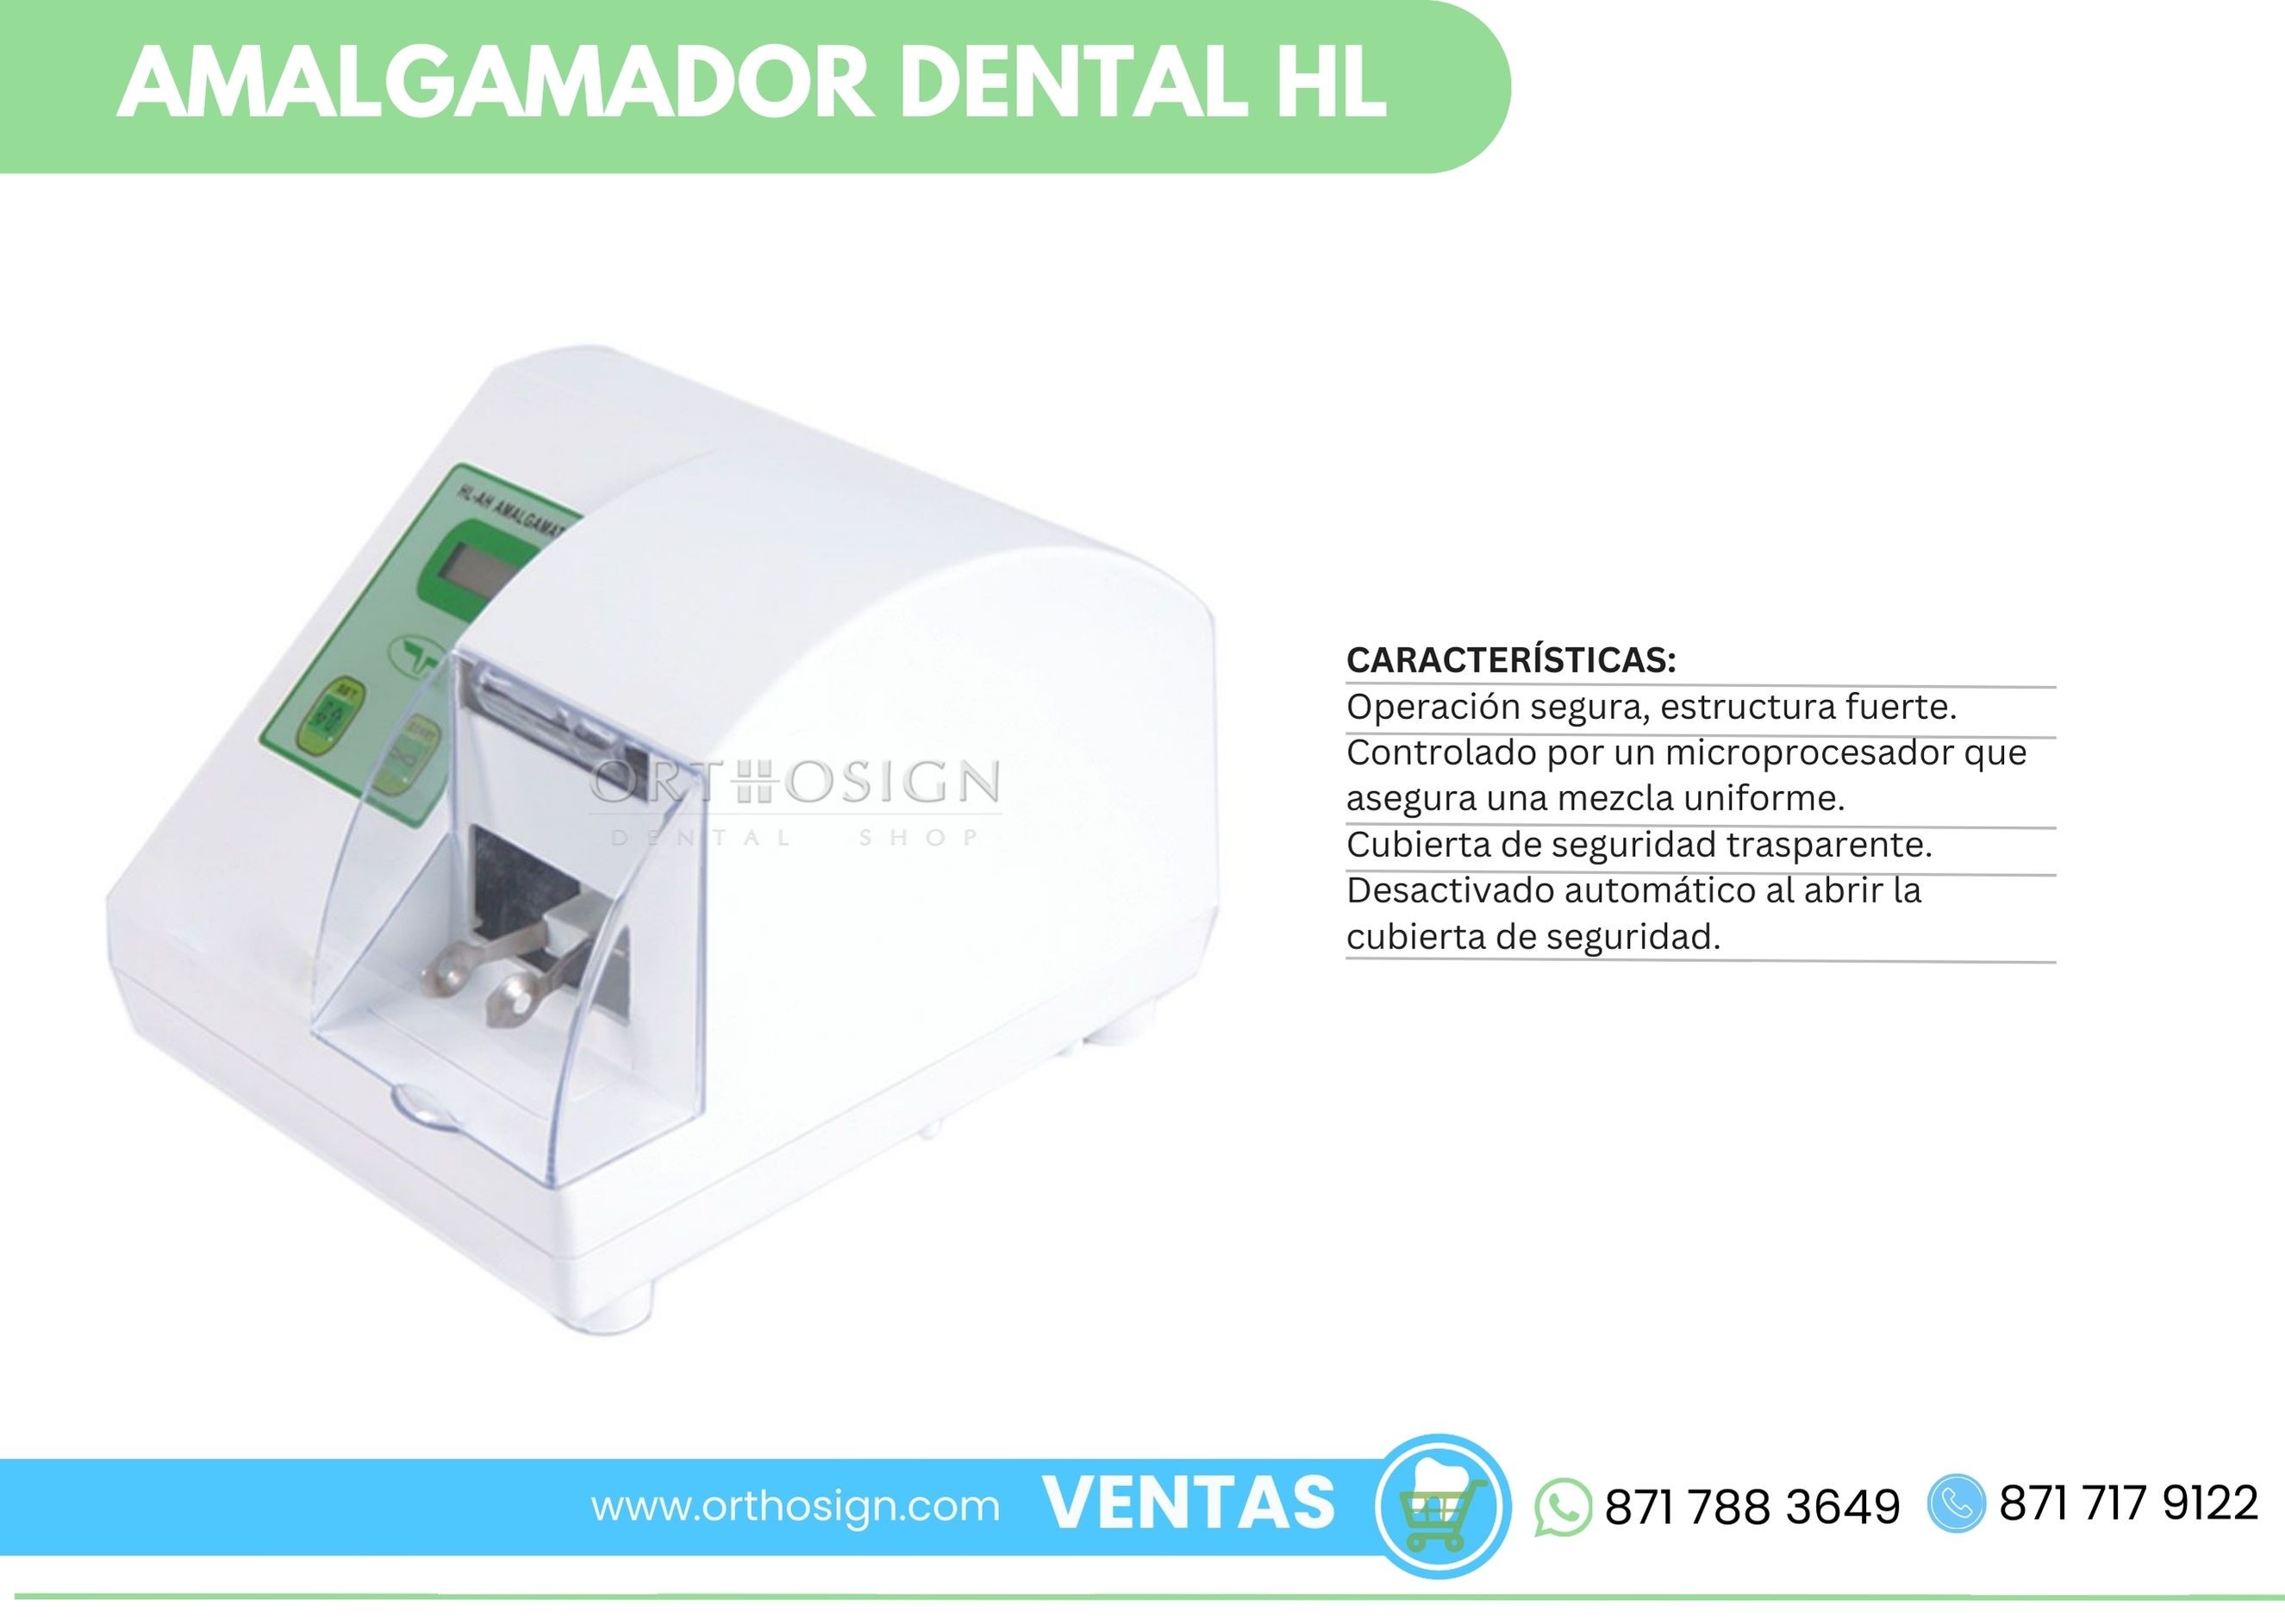 Amalgamador dental HL Orthosign